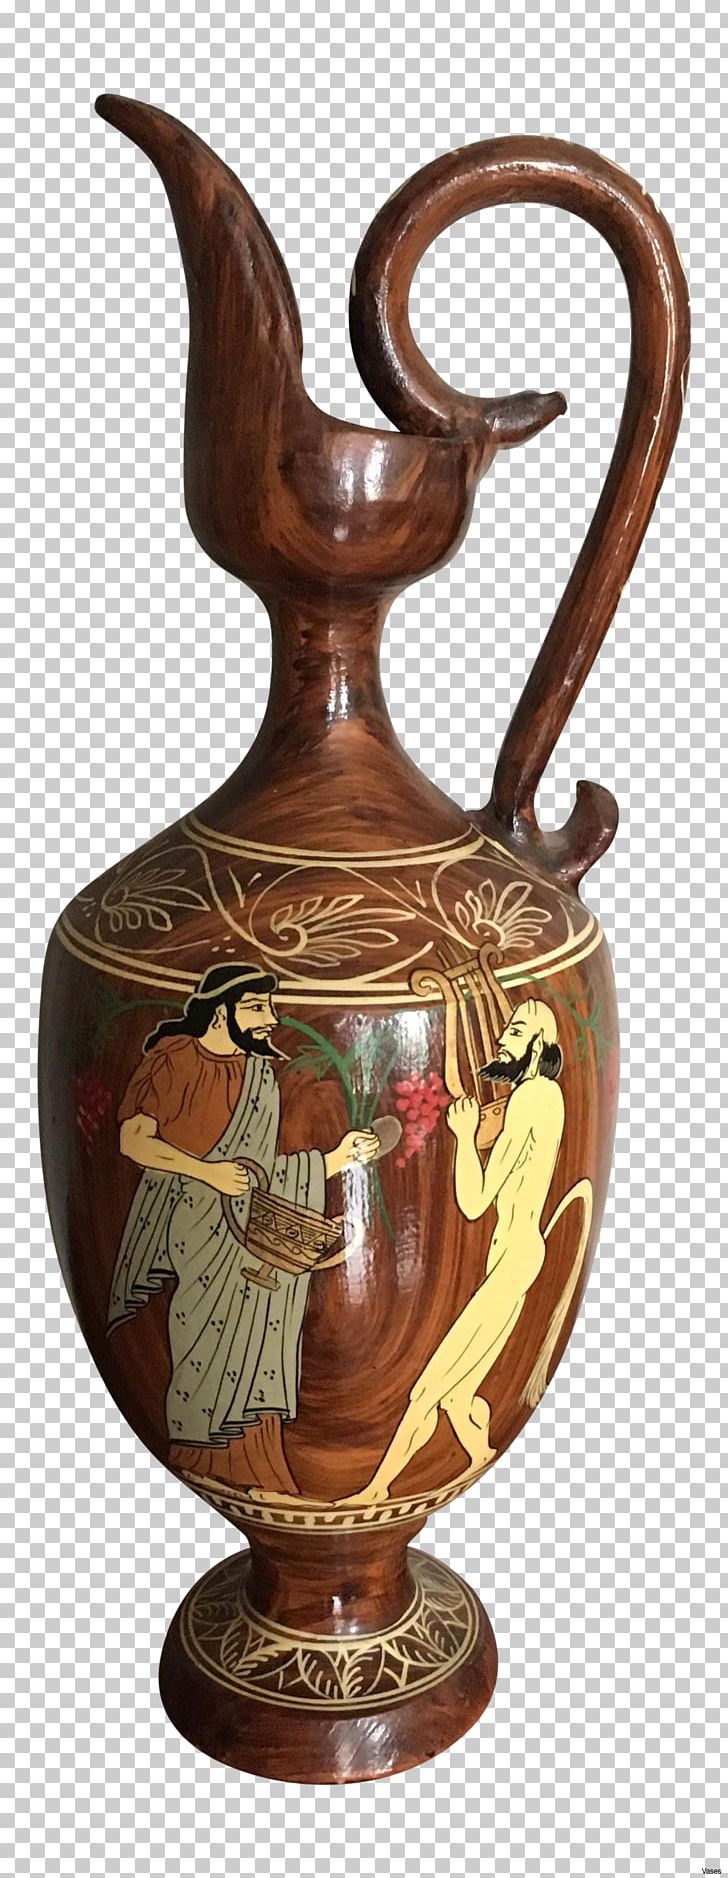 Vase Pitcher Pottery Ceramic Jug PNG, Clipart, Antique, Artifact, Brass, Ceramic, Copper Free PNG Download